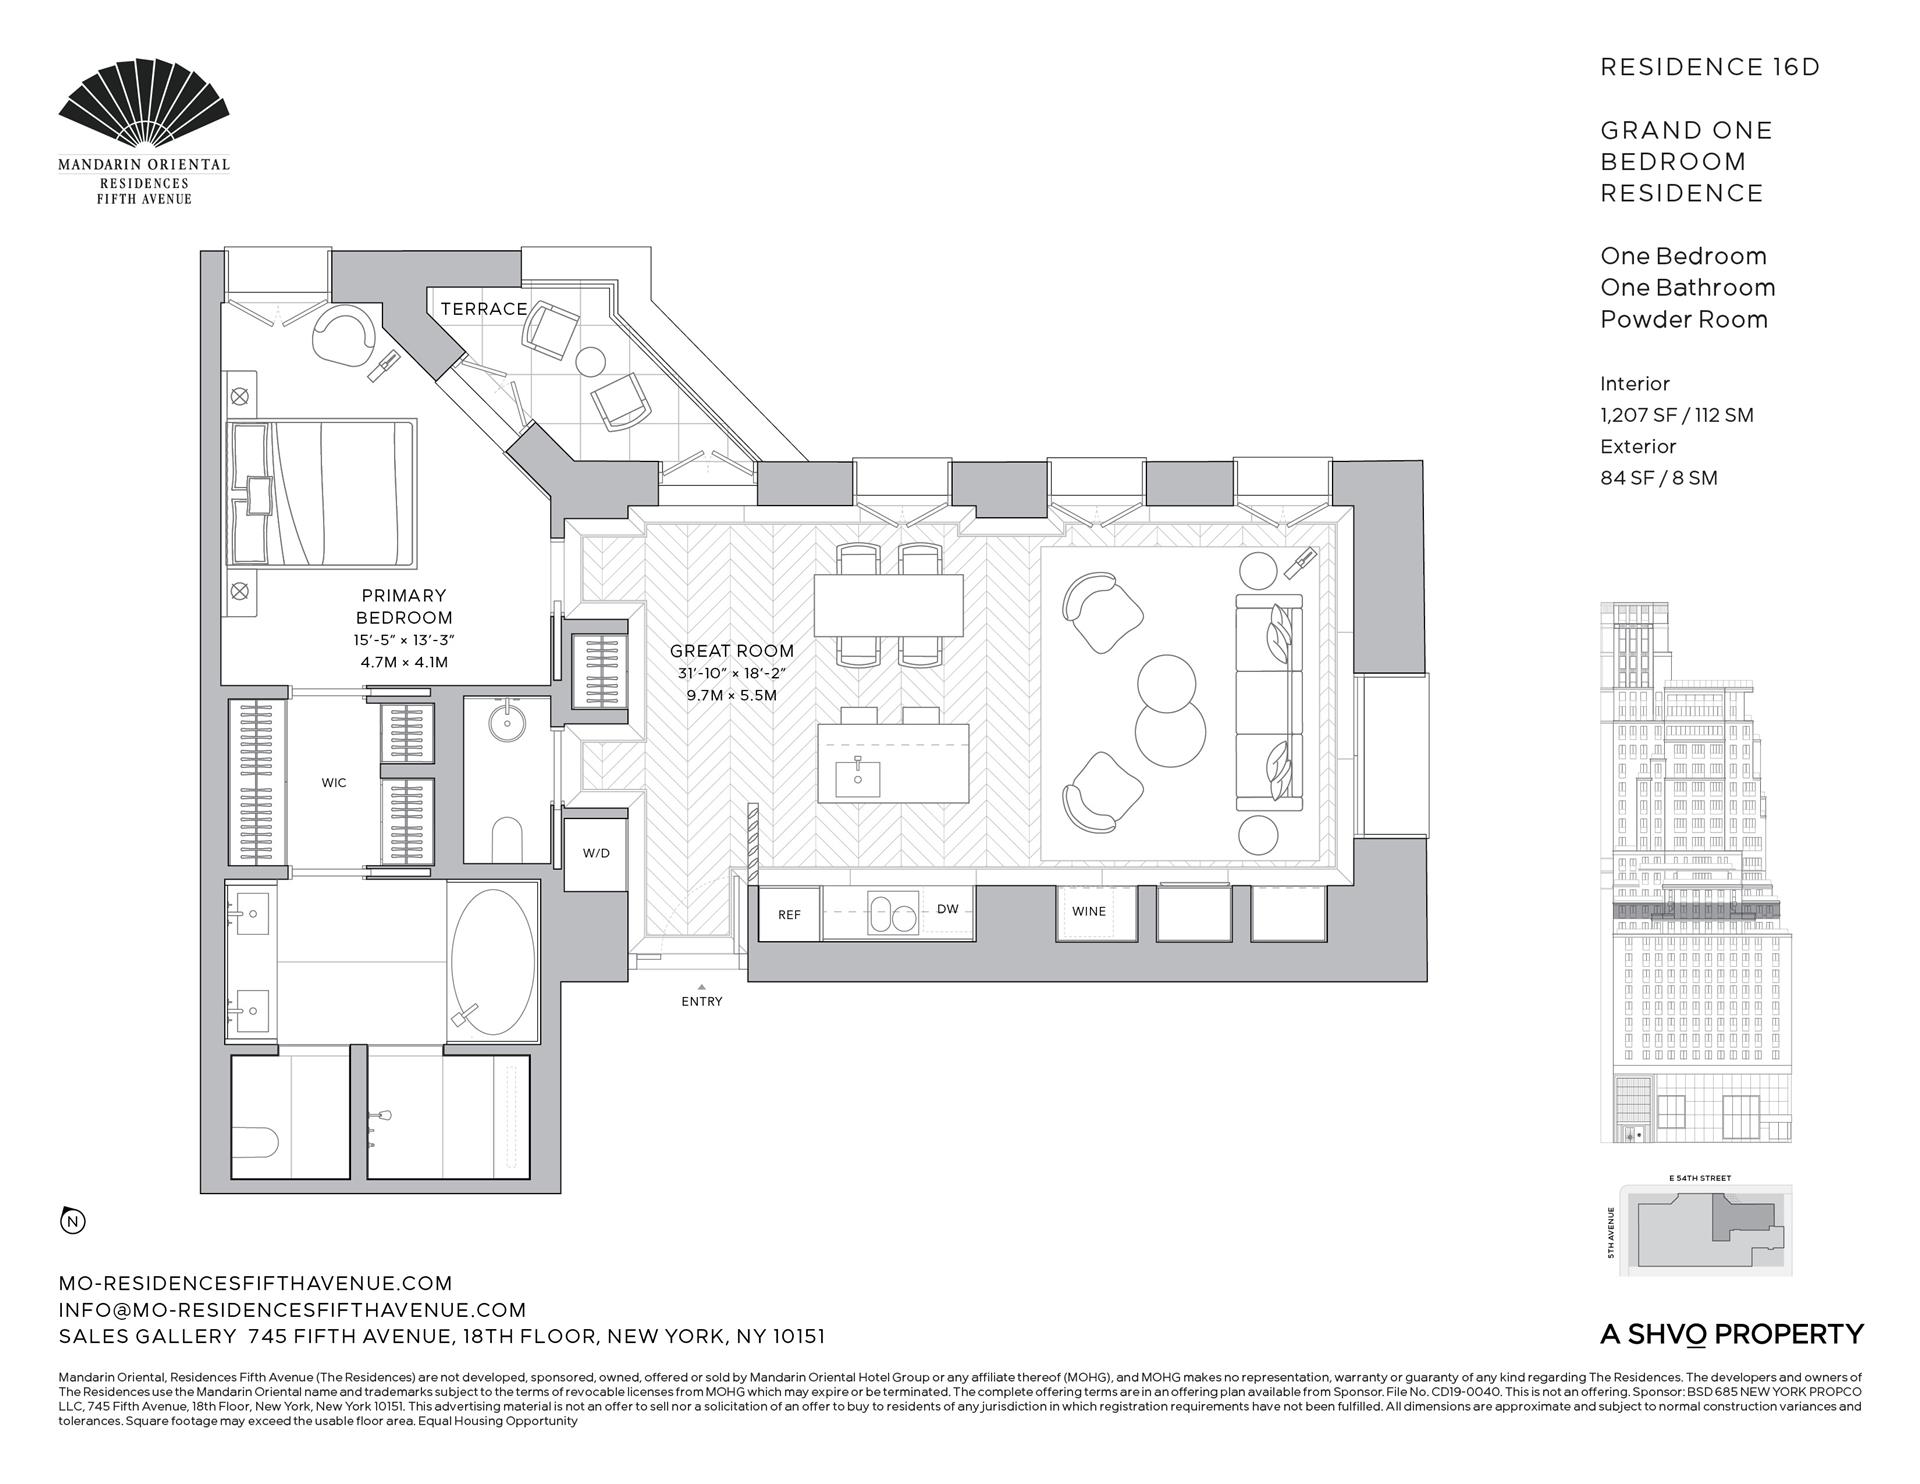 Floorplan for 685 5th Avenue, 16D